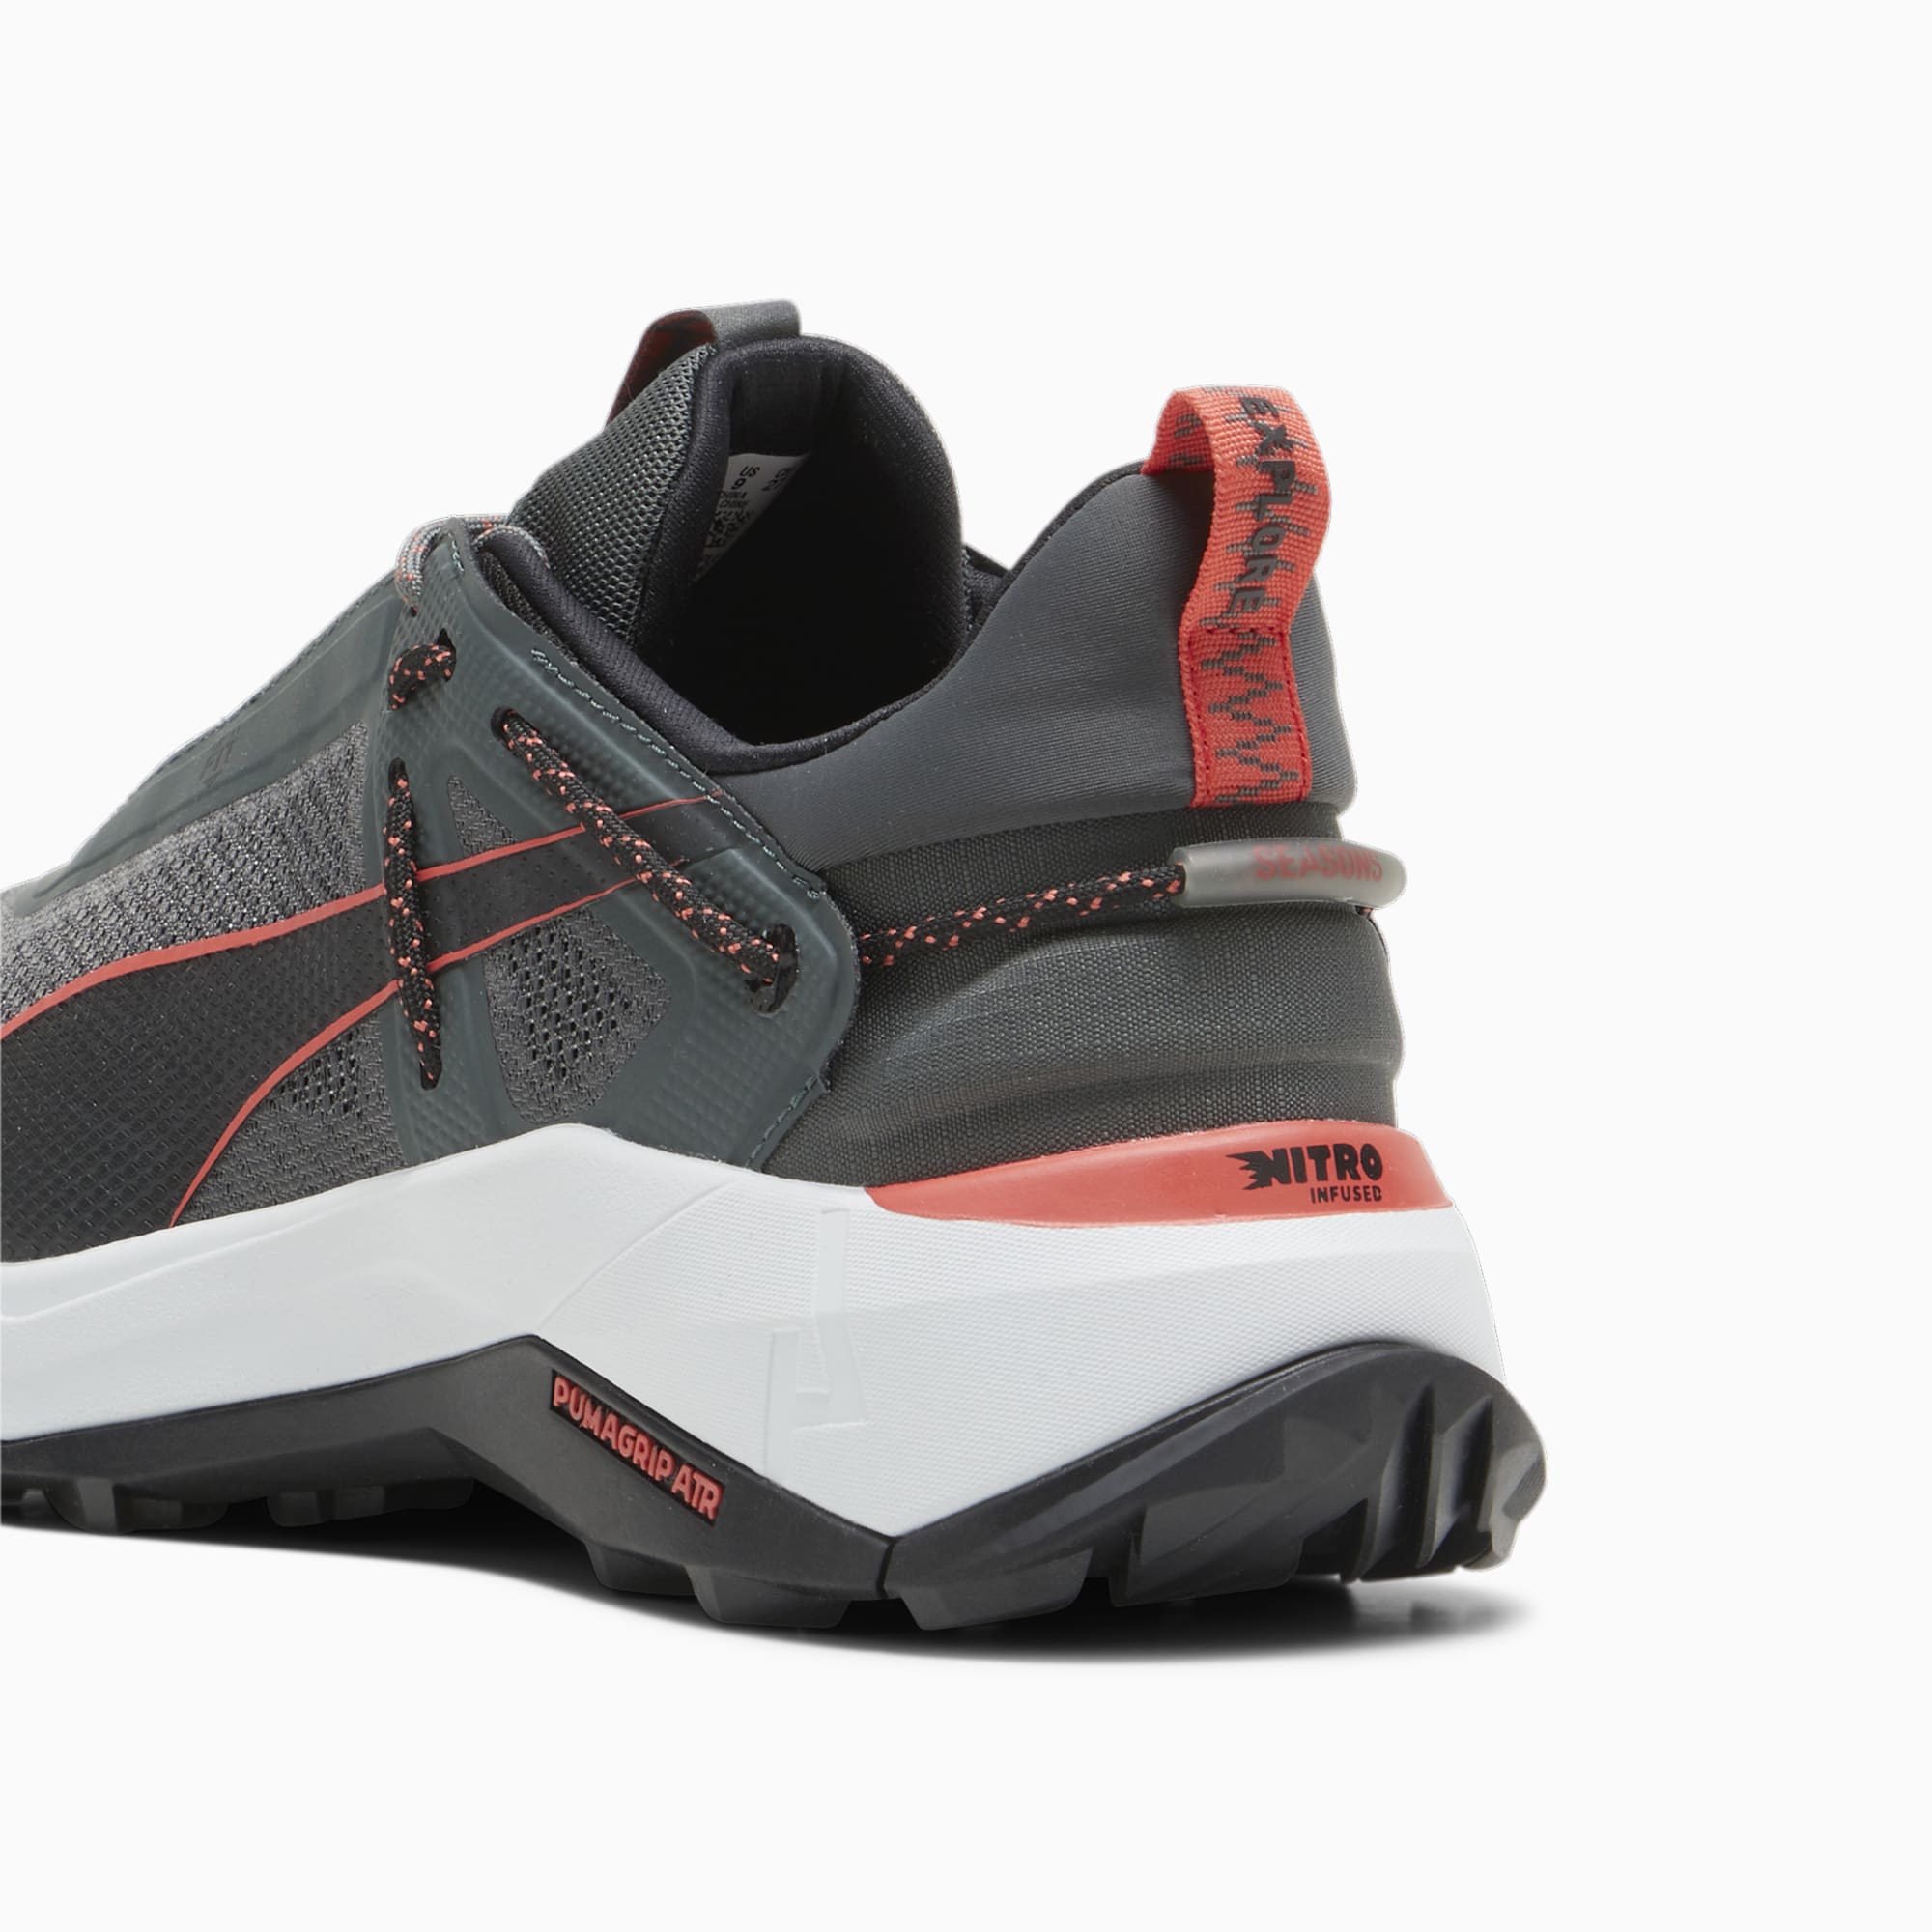 PUMA Explore Nitro™ Men's Hiking Shoe Sneakers, Mineral Grey/Black/Active Red